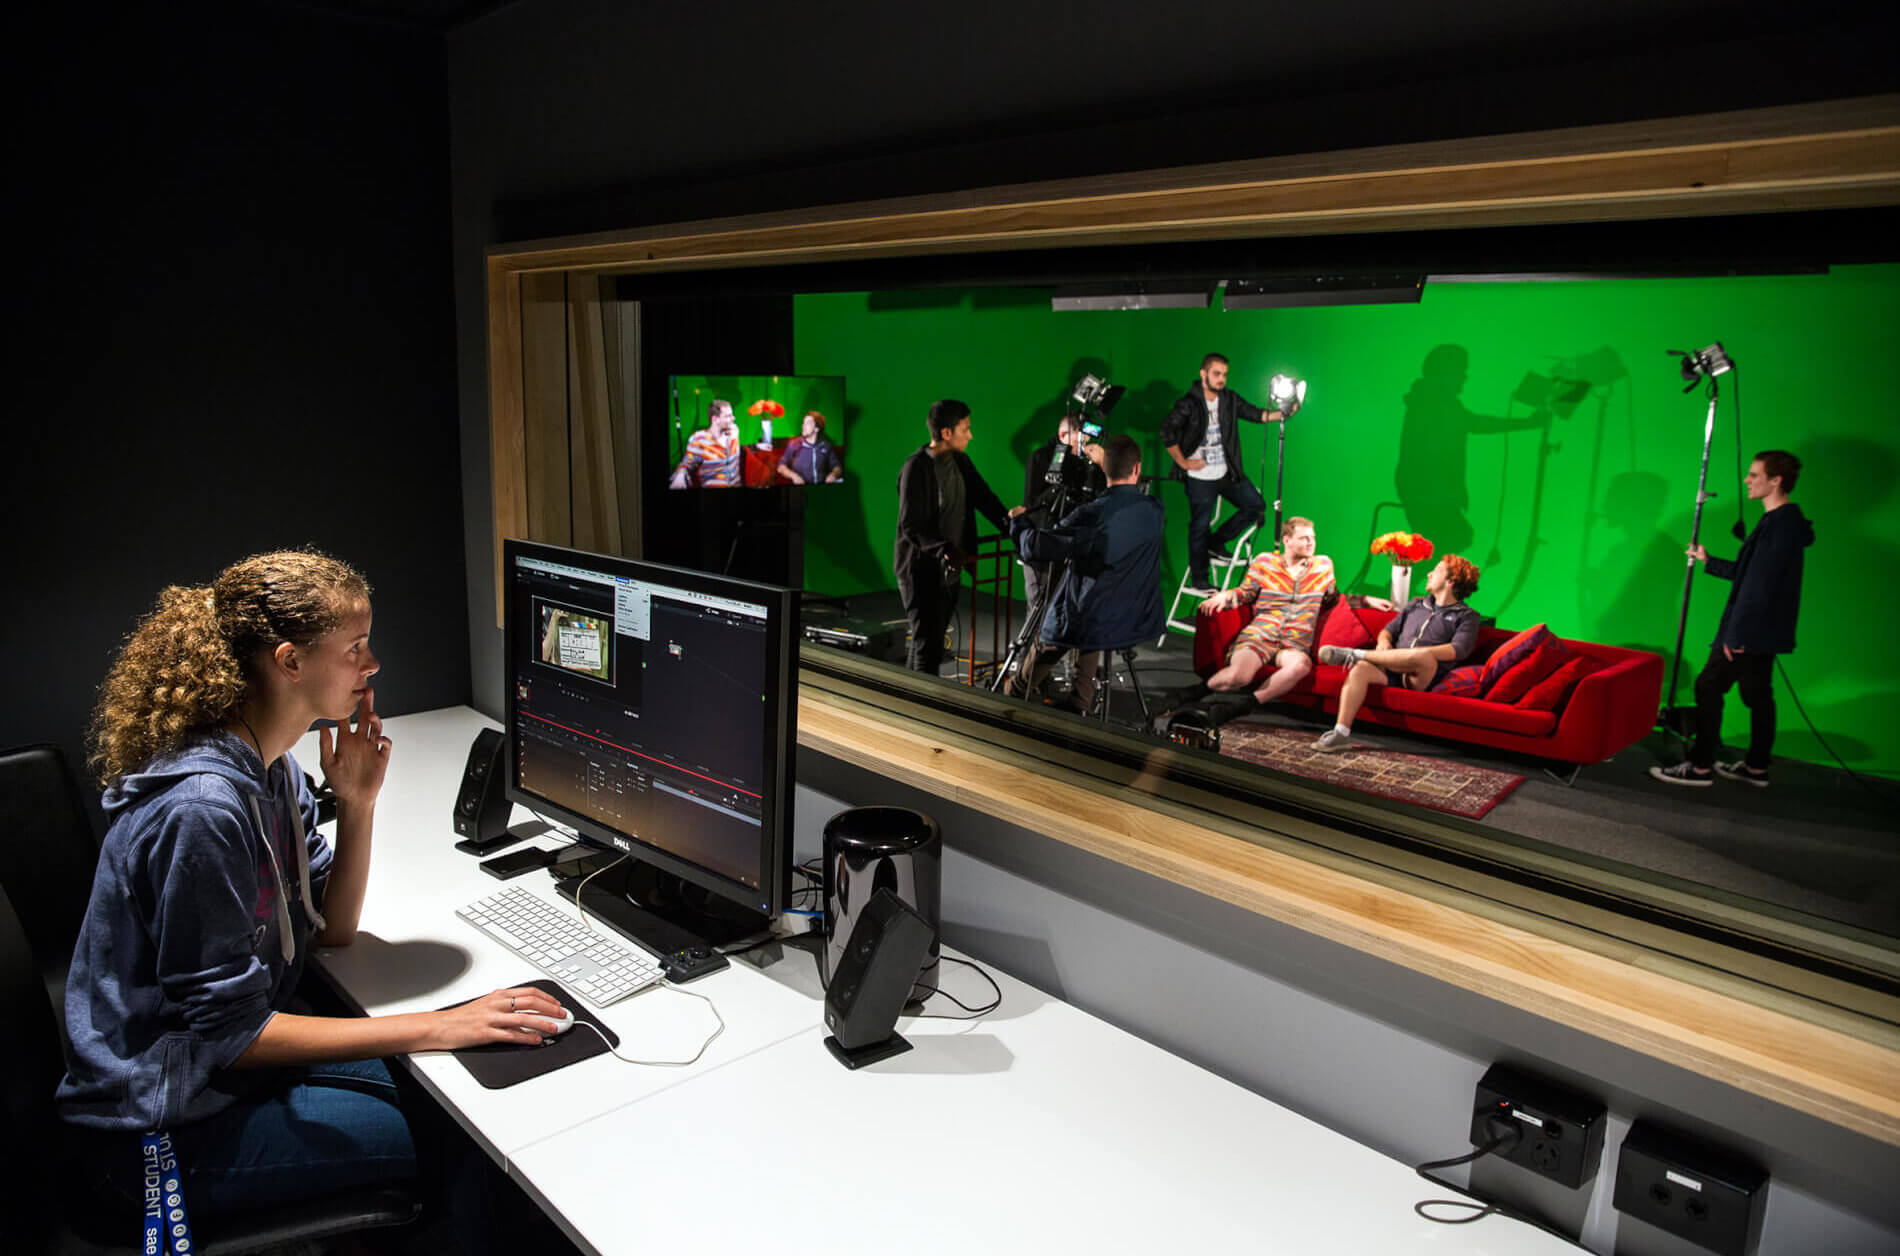 Students Filming in Green Screen Wonder Room